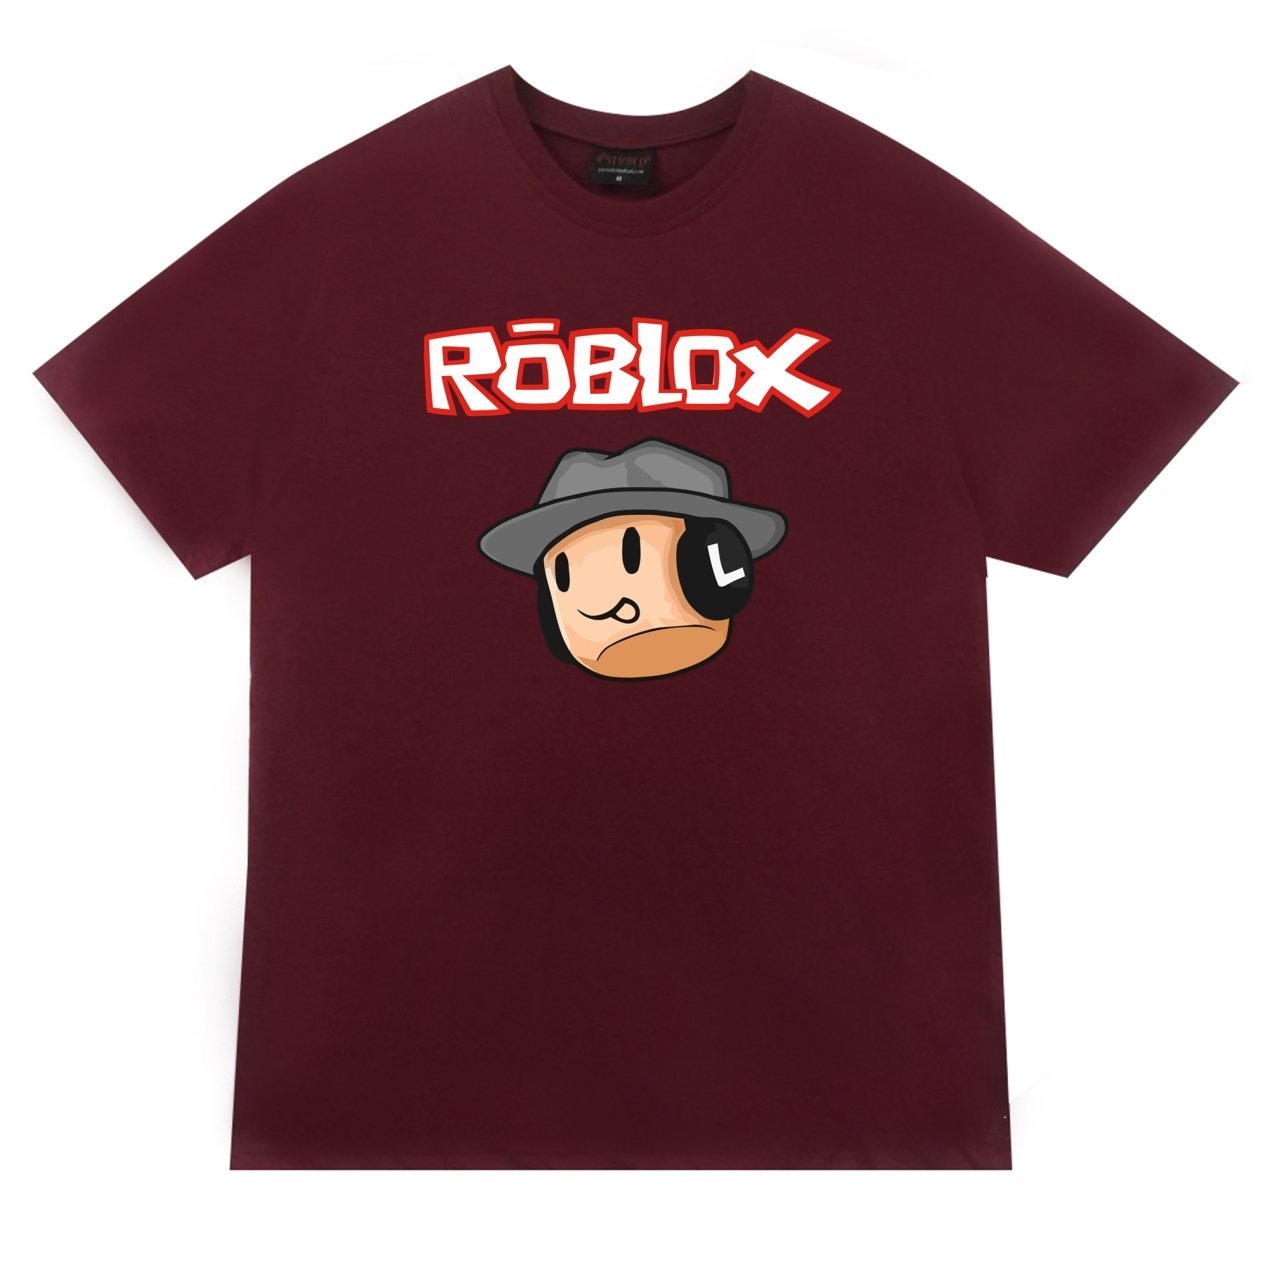 Roblox Buyuk Beden Tisort - roblox t shirt rozet